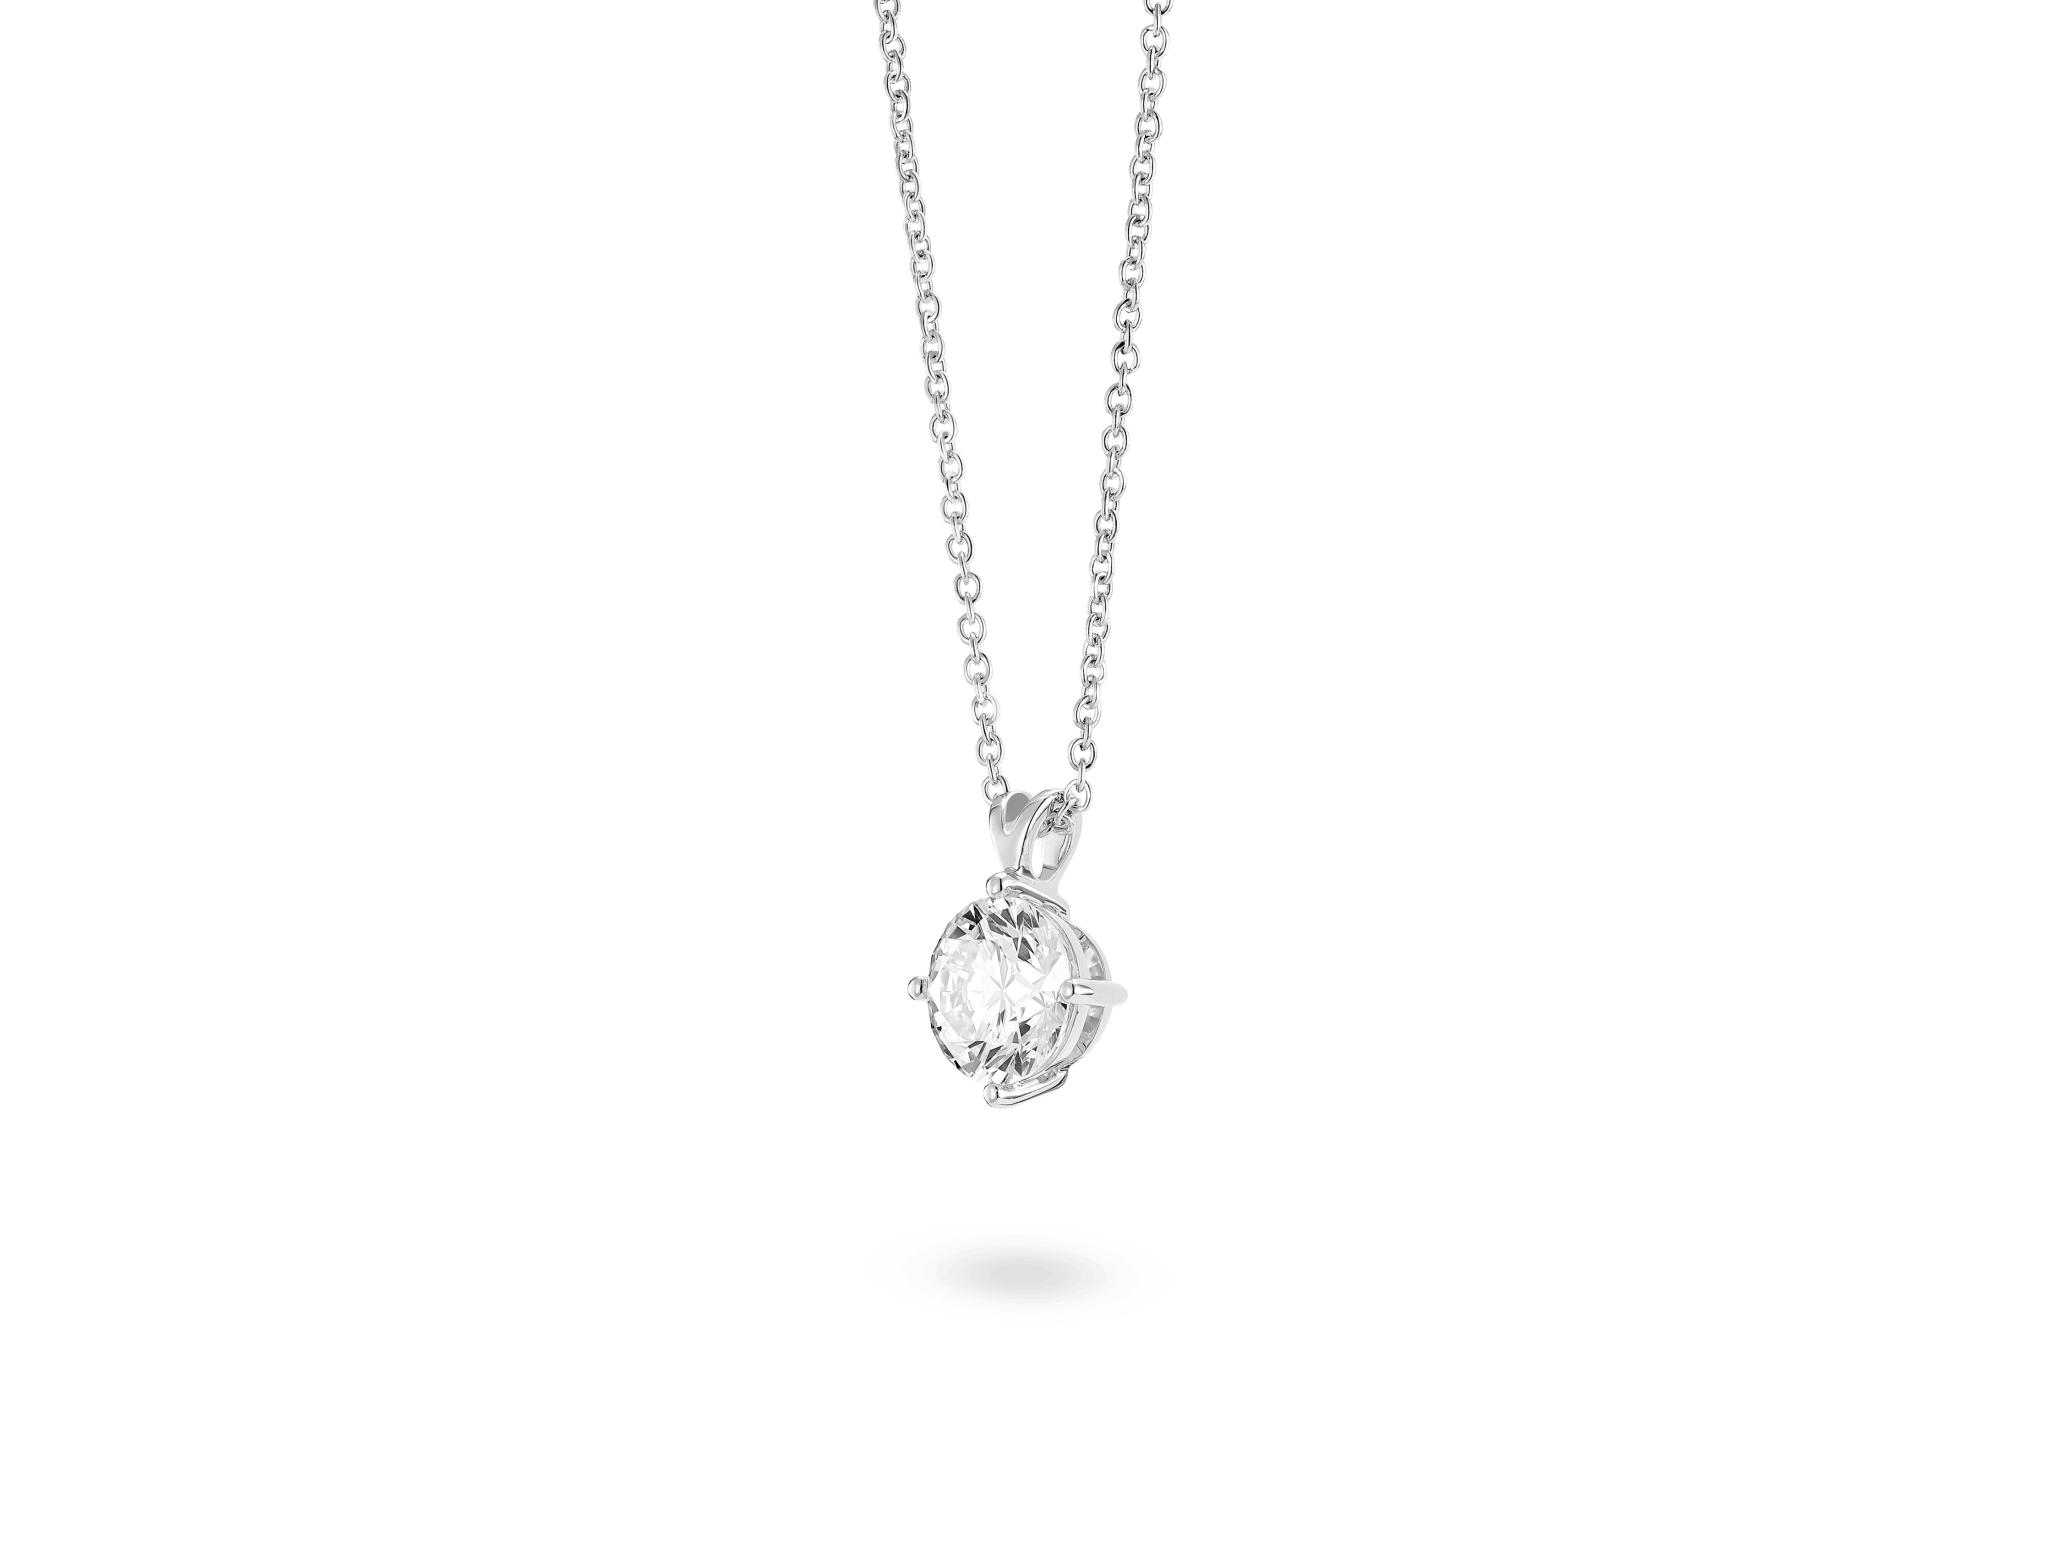 Finest Lab-Grown Diamond 1ct. Round Brilliant Solitaire Pendant | White - #Lightbox Jewelry#